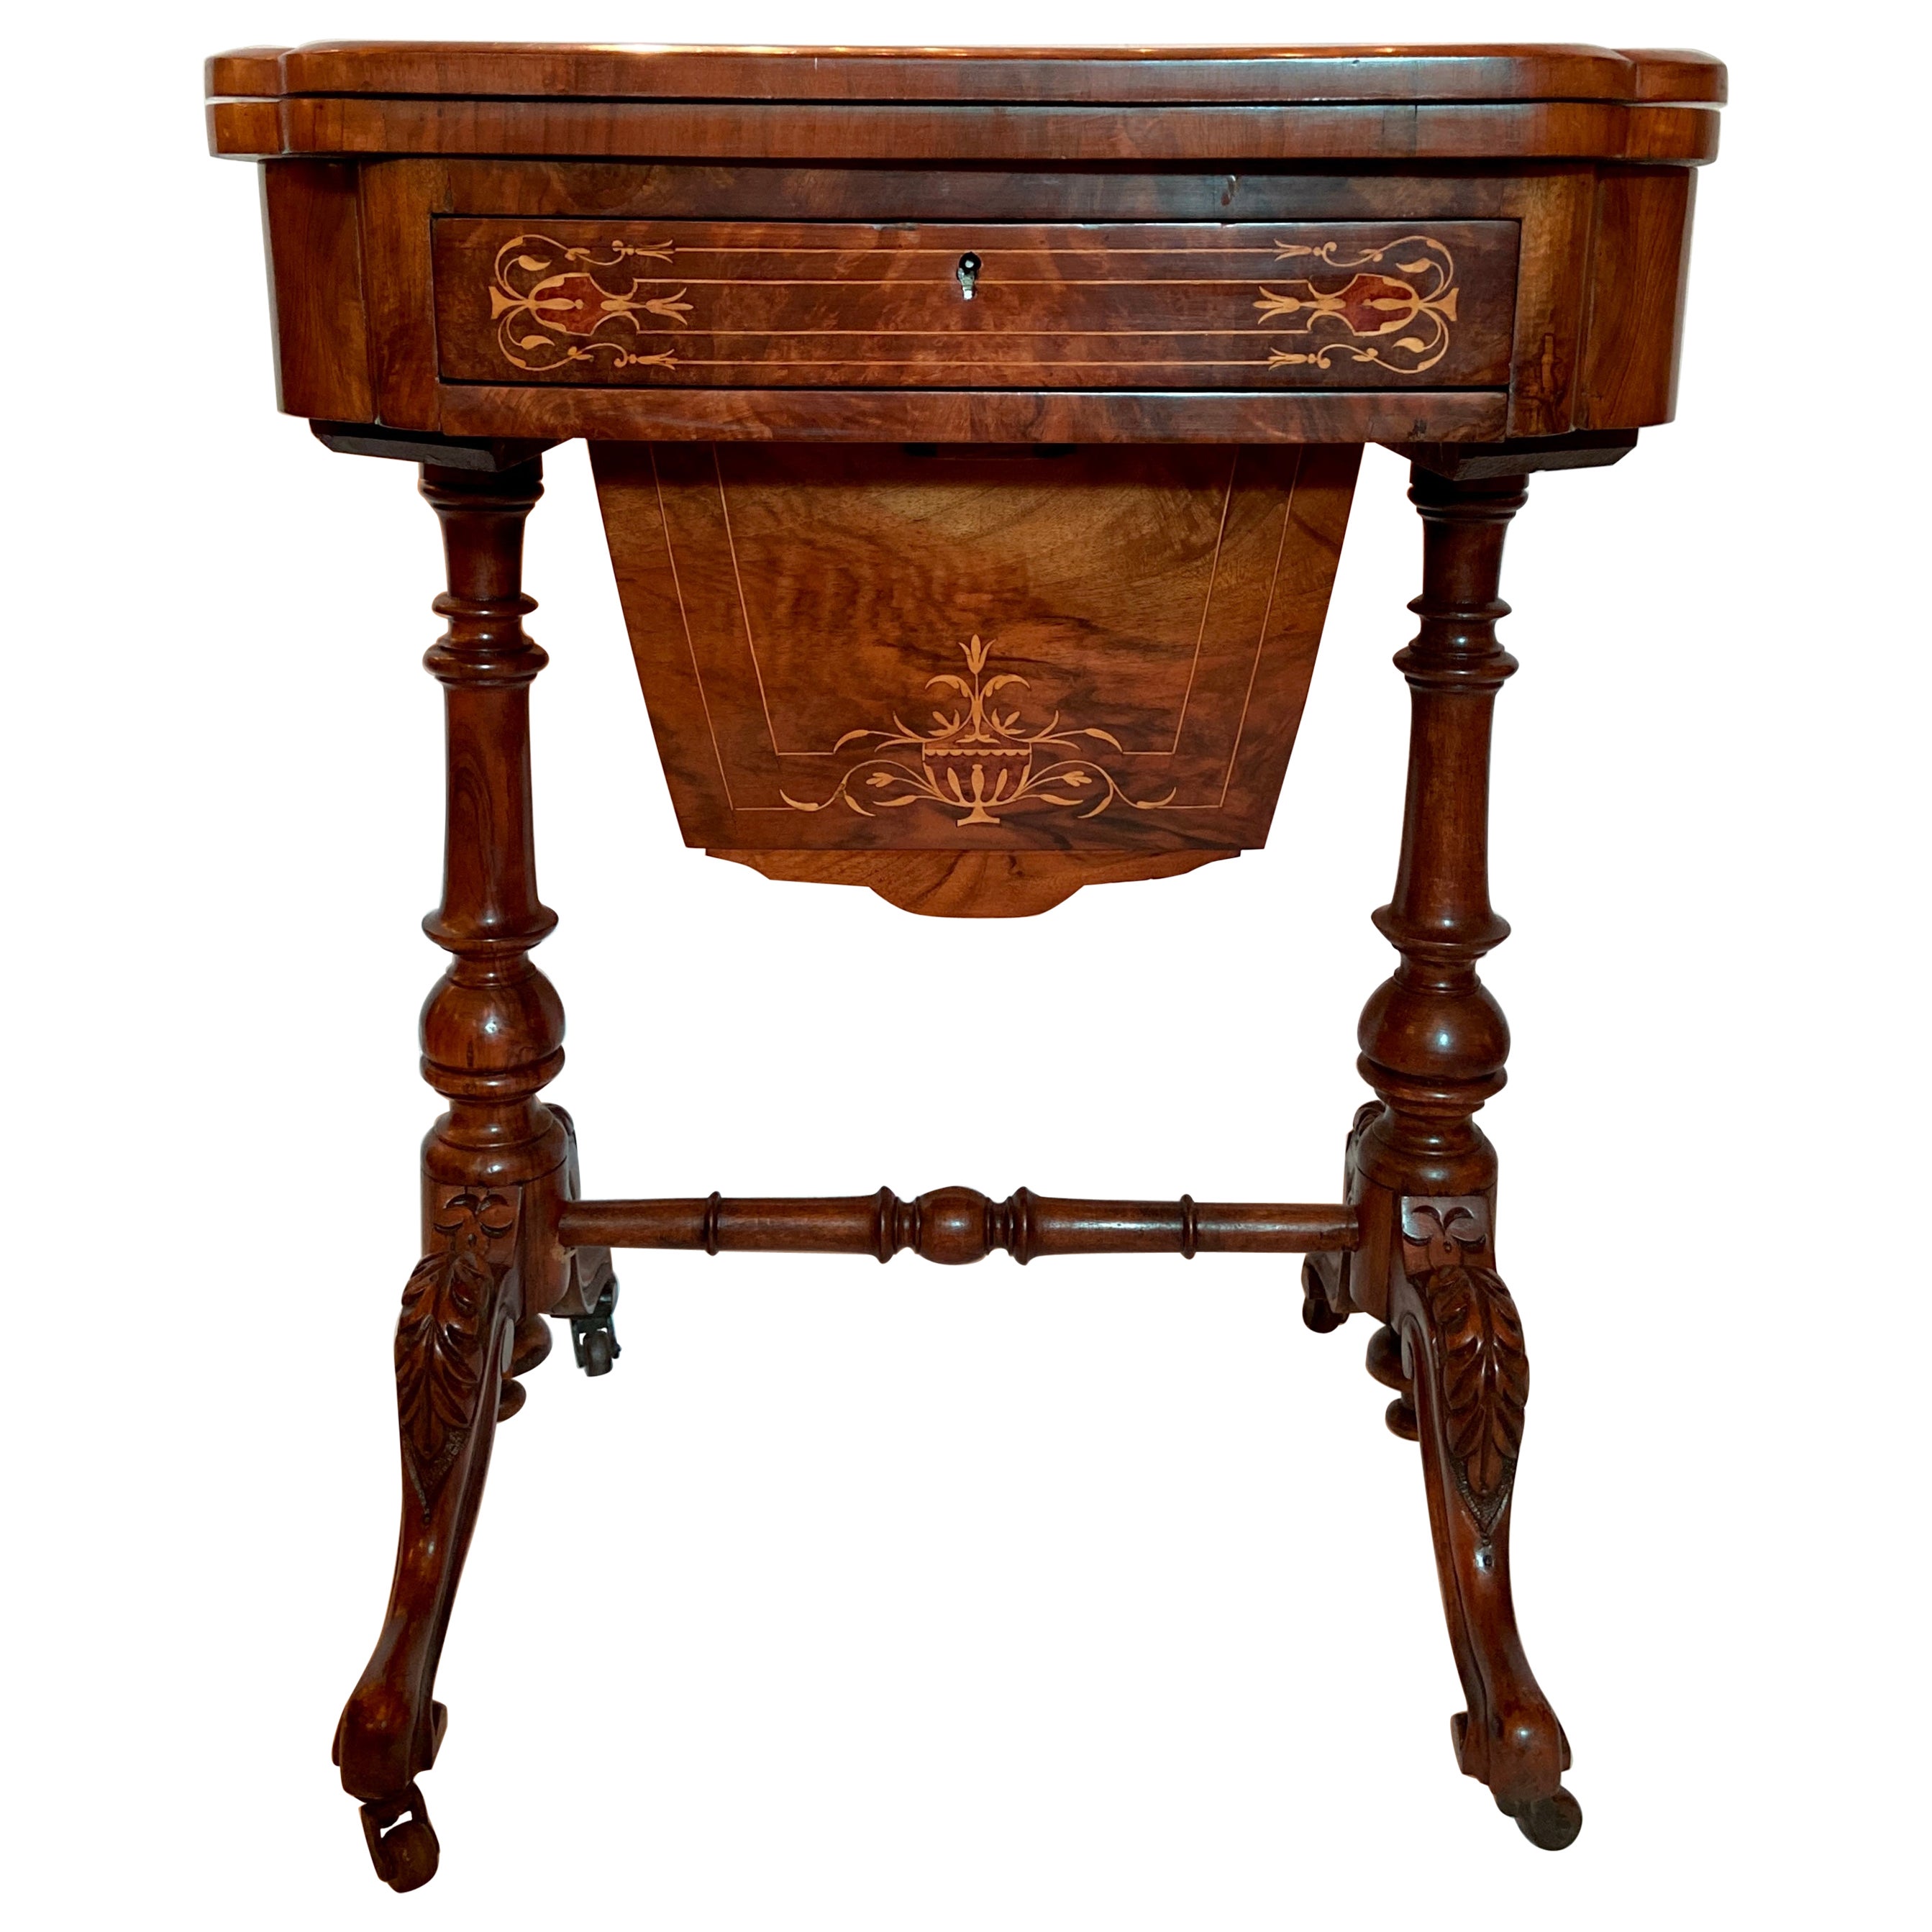 Antique English Burled Walnut Satinwood Inlaid Games Table, Circa 1865-1885